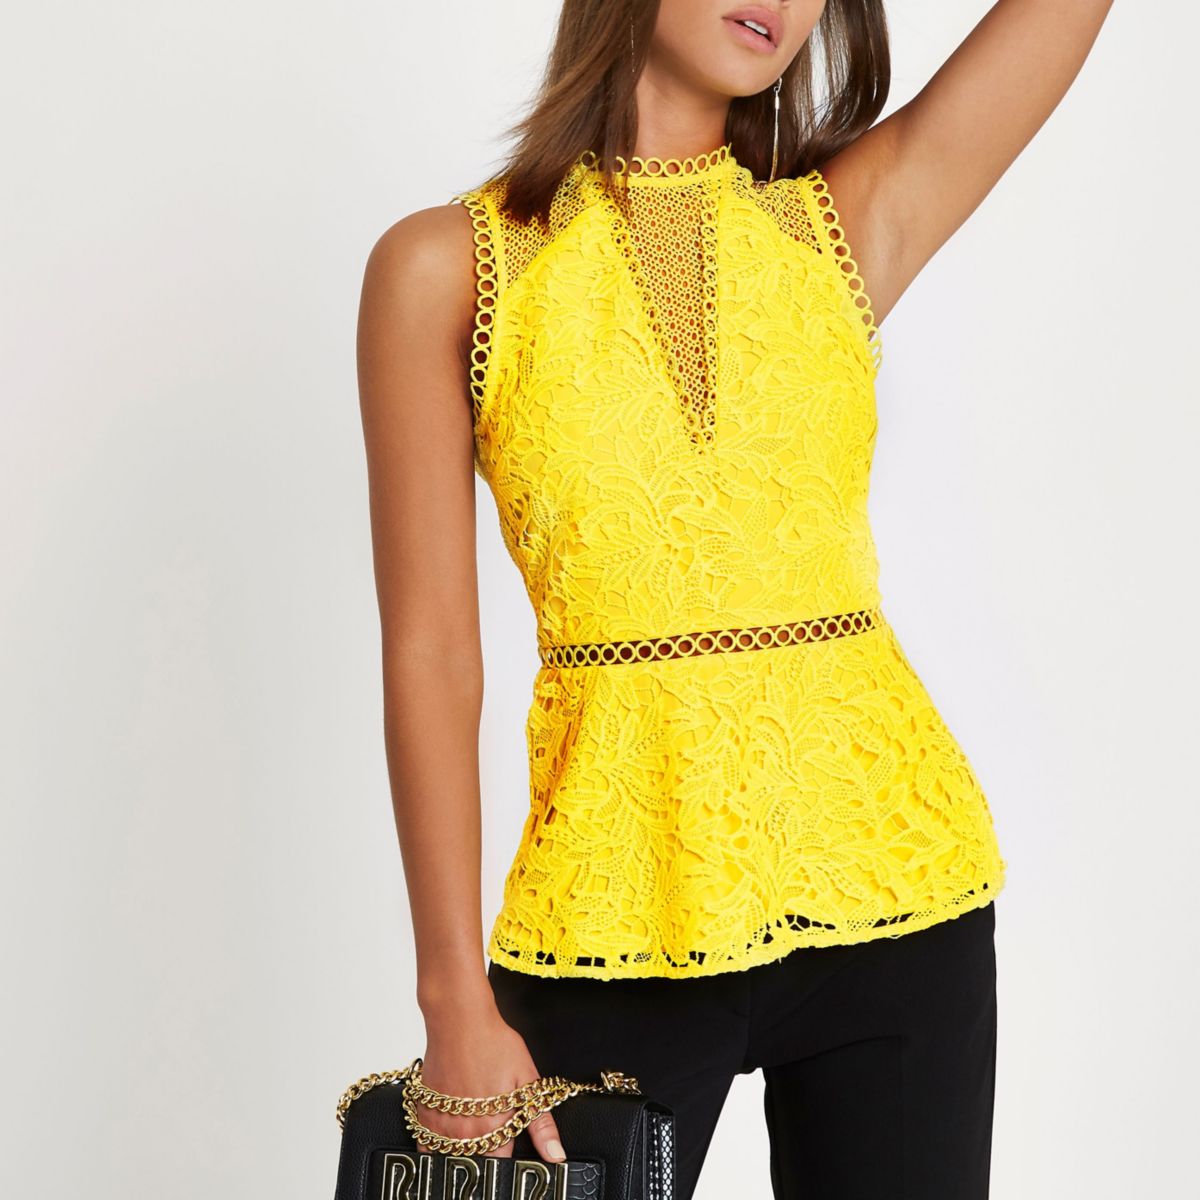 Yellow lace sleeveless peplum top - Blouses - Tops - women